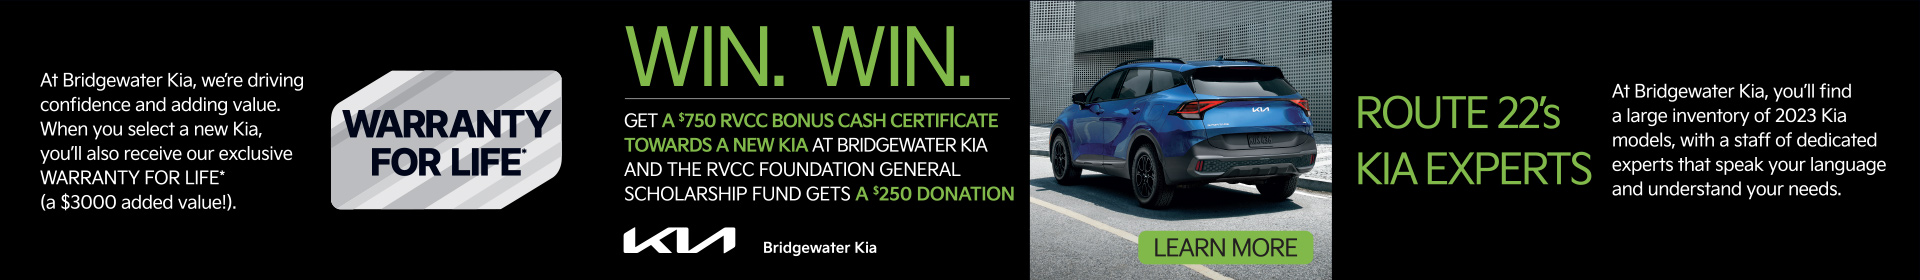 Bonus Cash Certificate for Bridgewater Kia